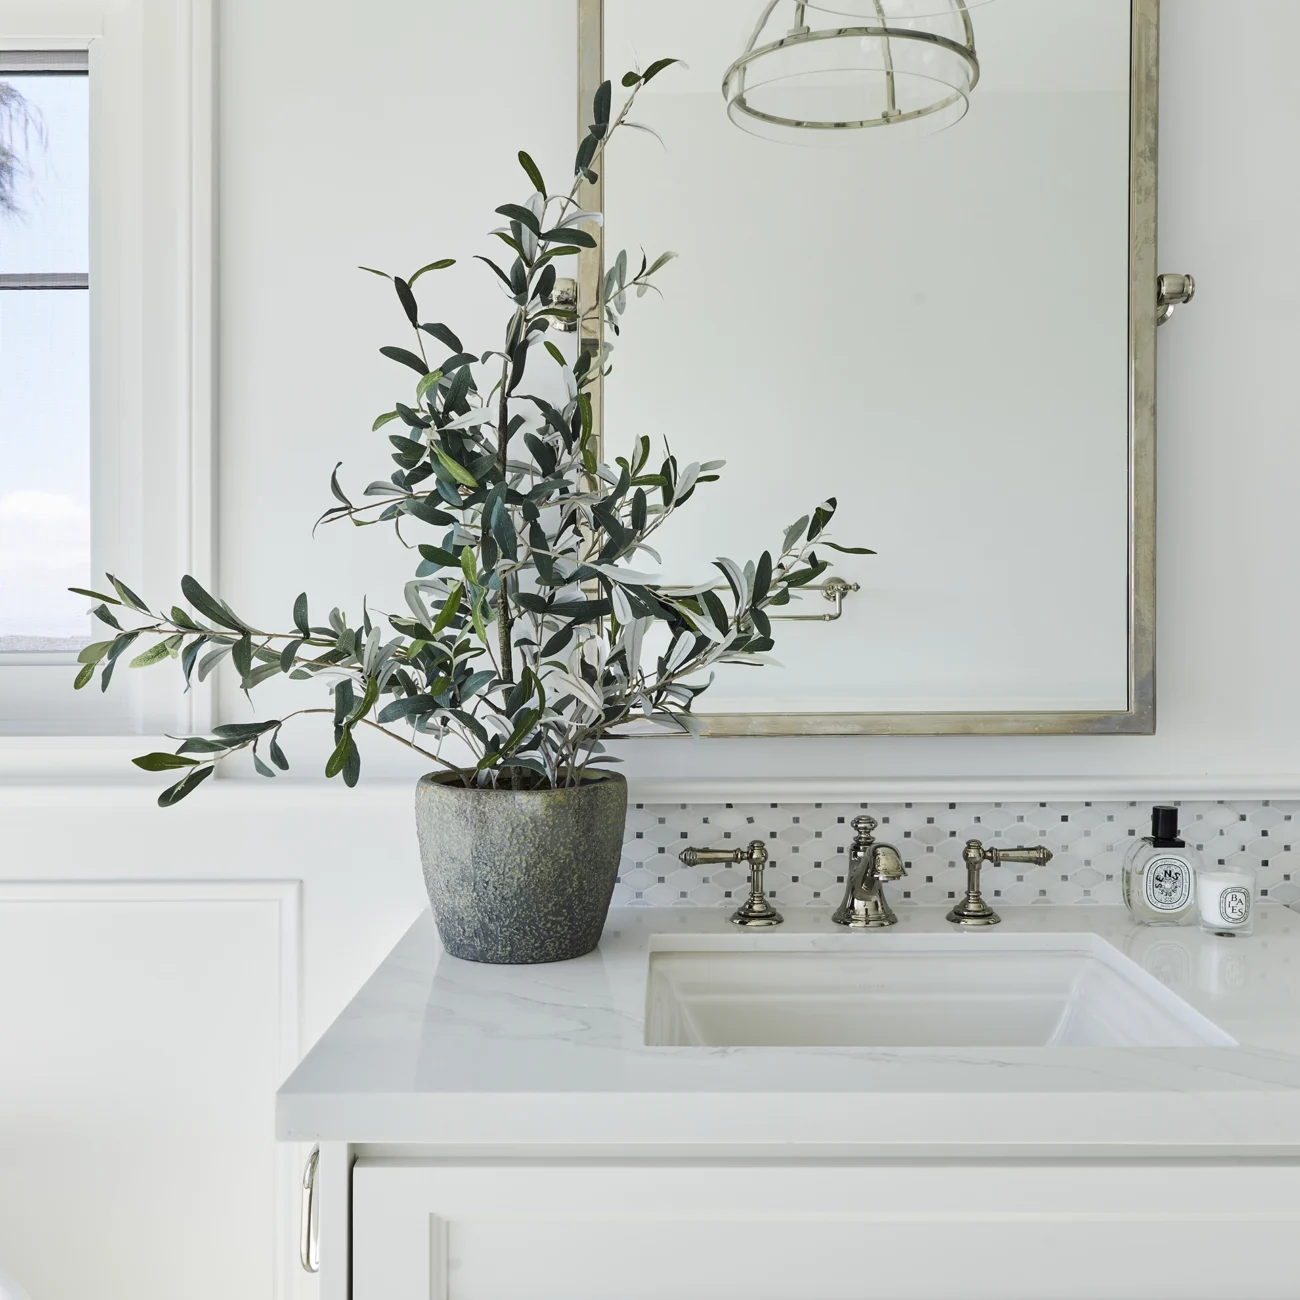 Christine Vroom Interiors Vigilance | Bright white marble bathroom vanity